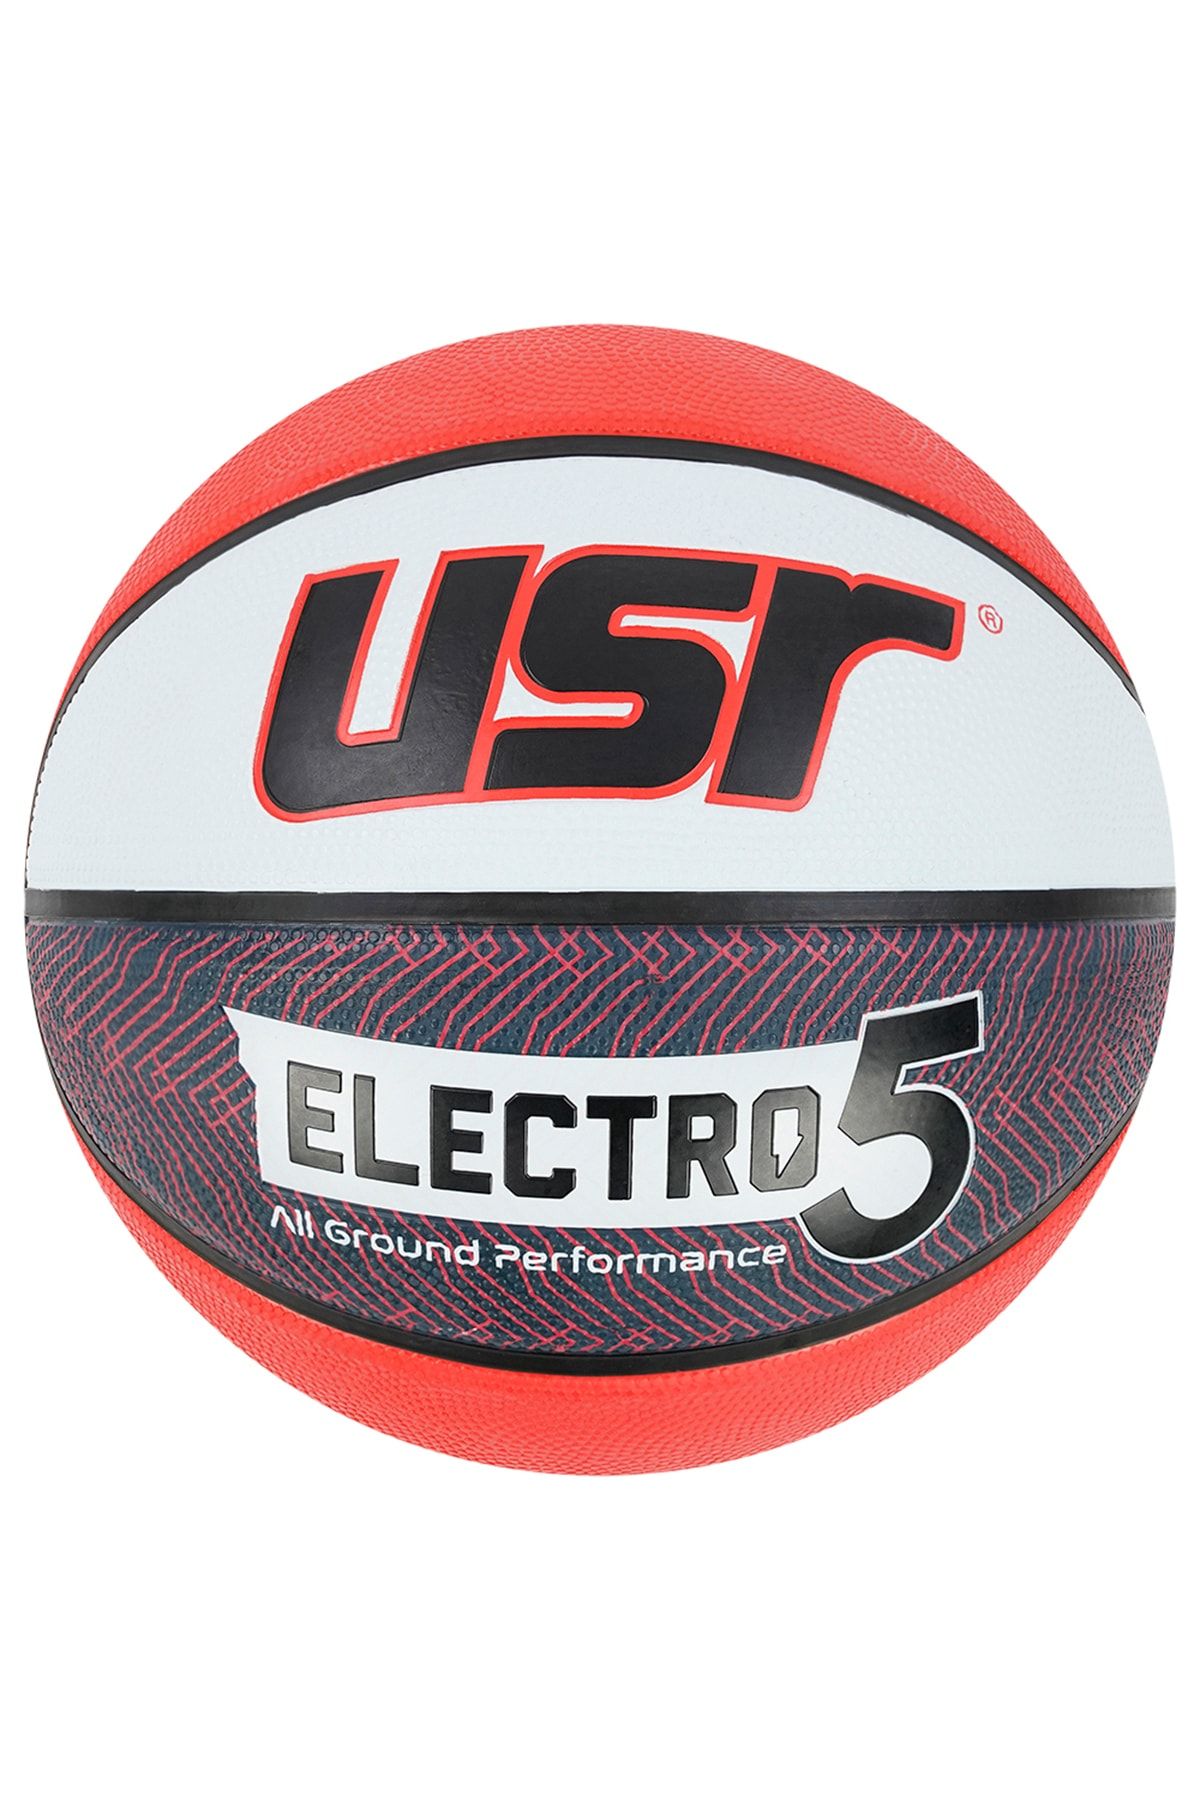 Usr Electro5.2 Kauçuk 5 No Basketbol Topu